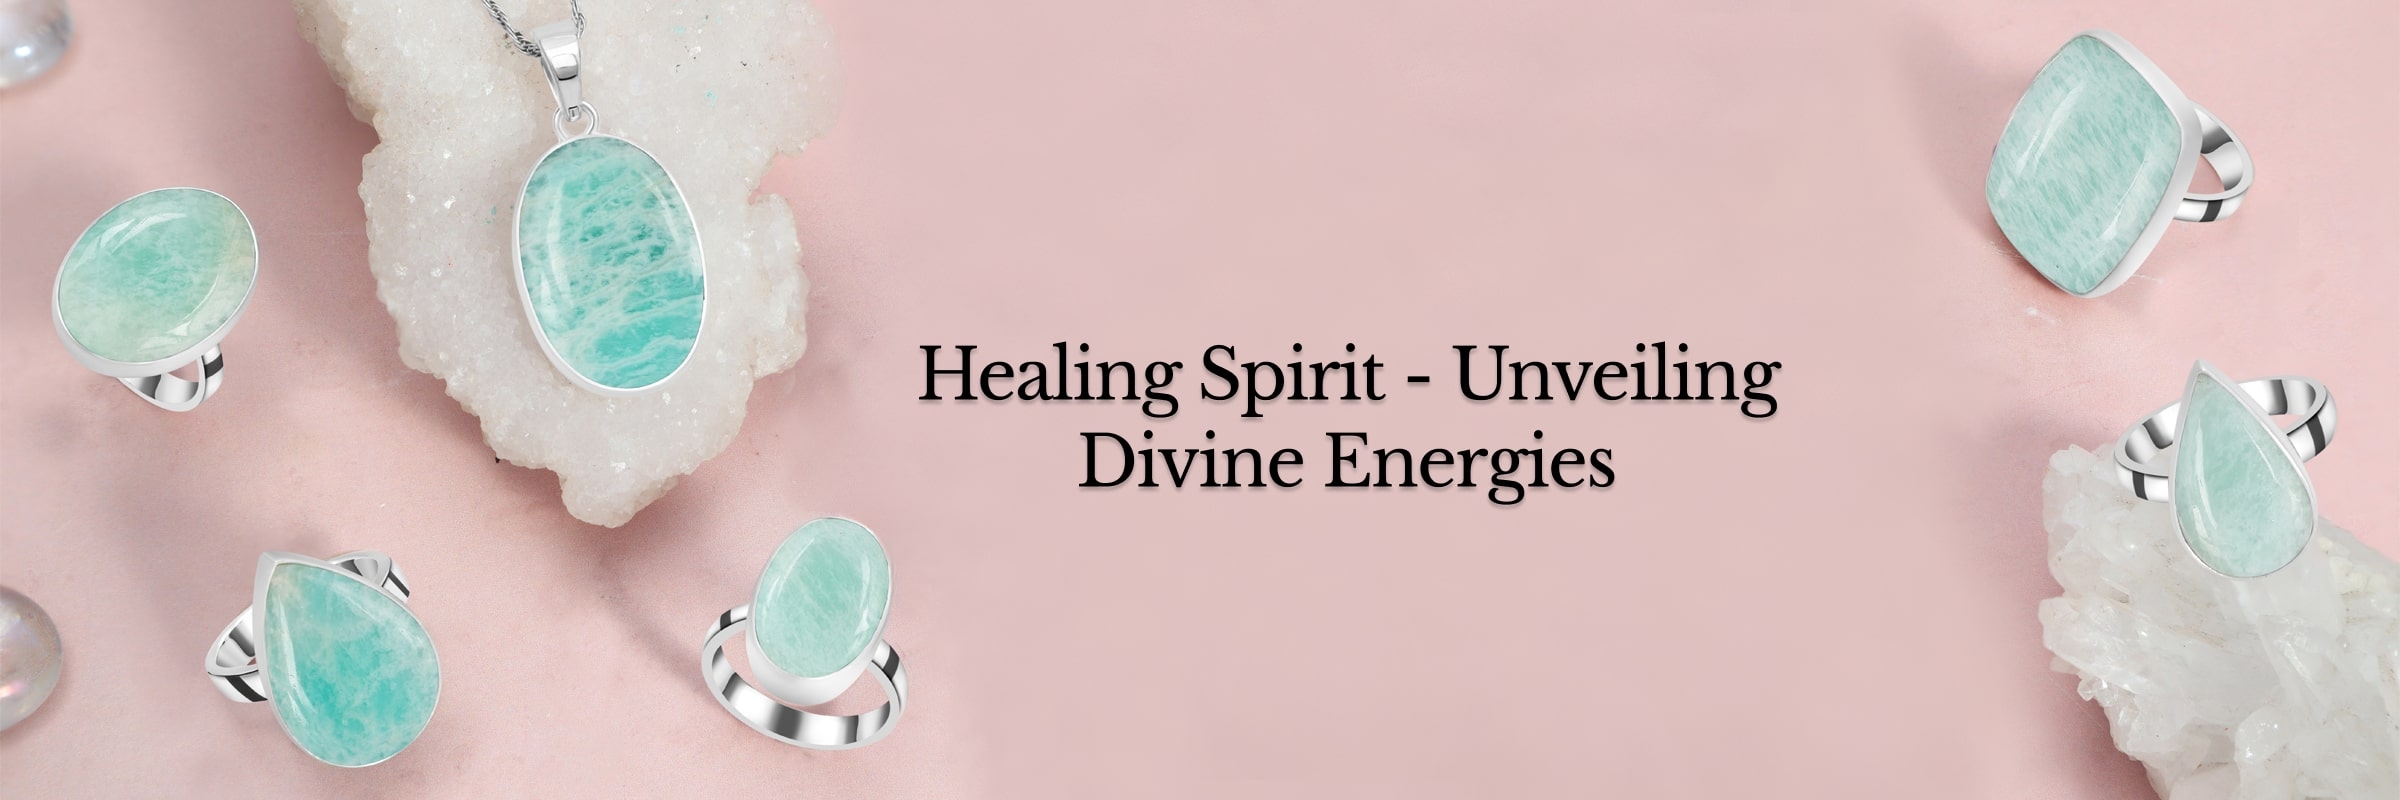 Spiritual healing properties